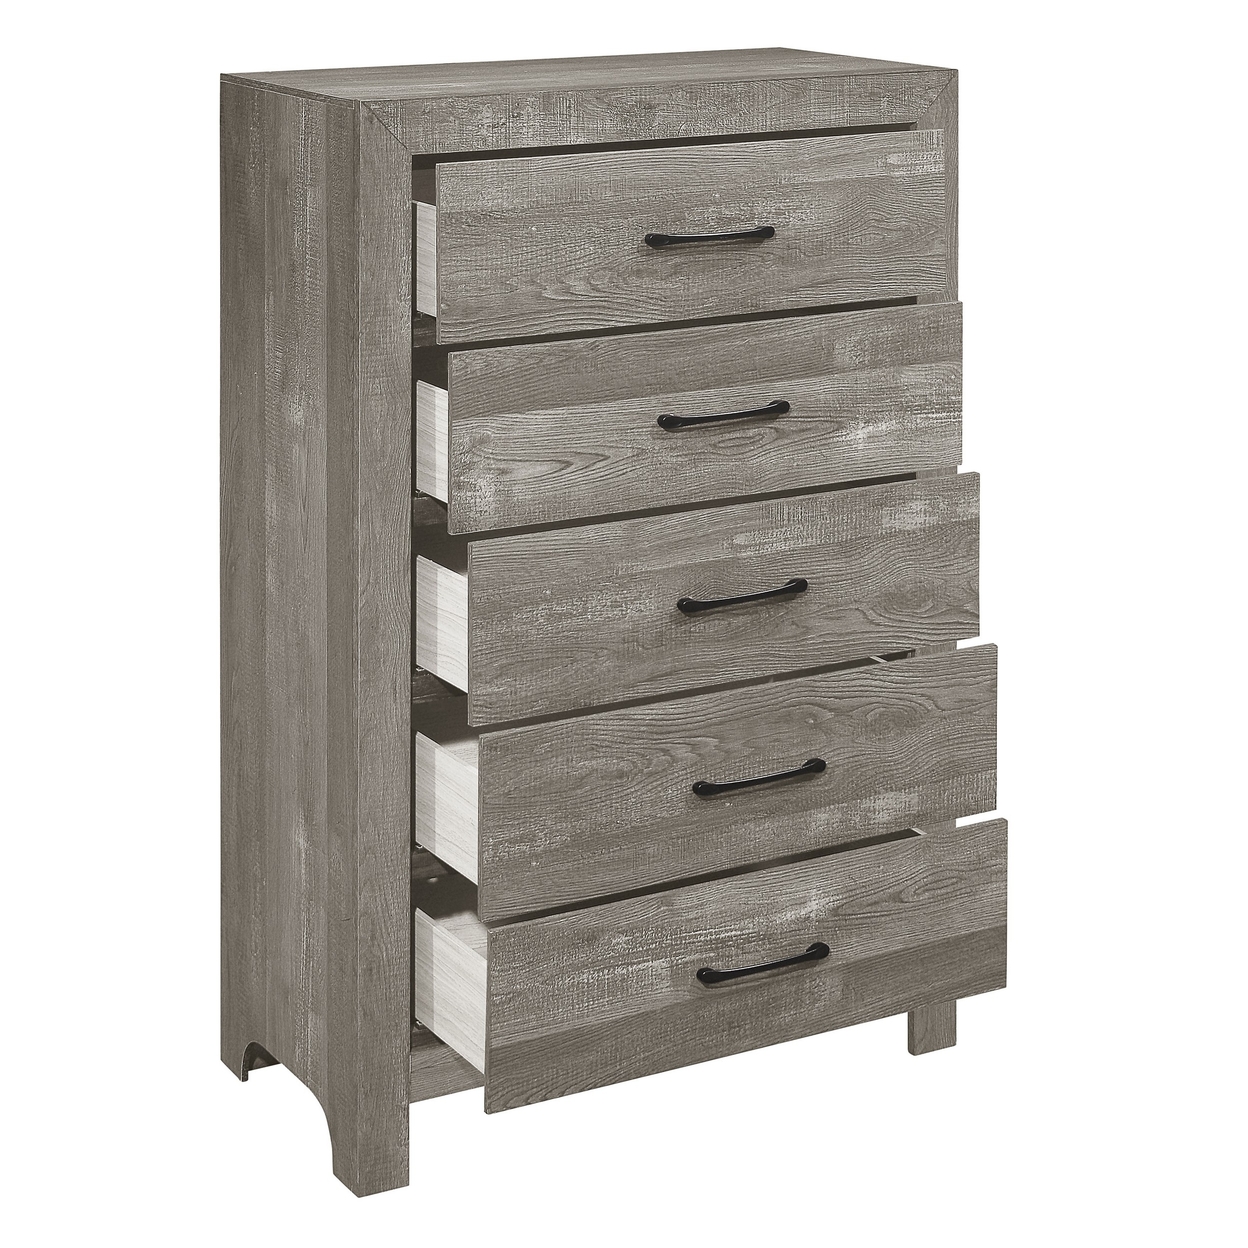 48 Inch Tall Dresser Chest, Gray Wood, Black Nickel Bar Handles, 5 Drawers- Saltoro Sherpi